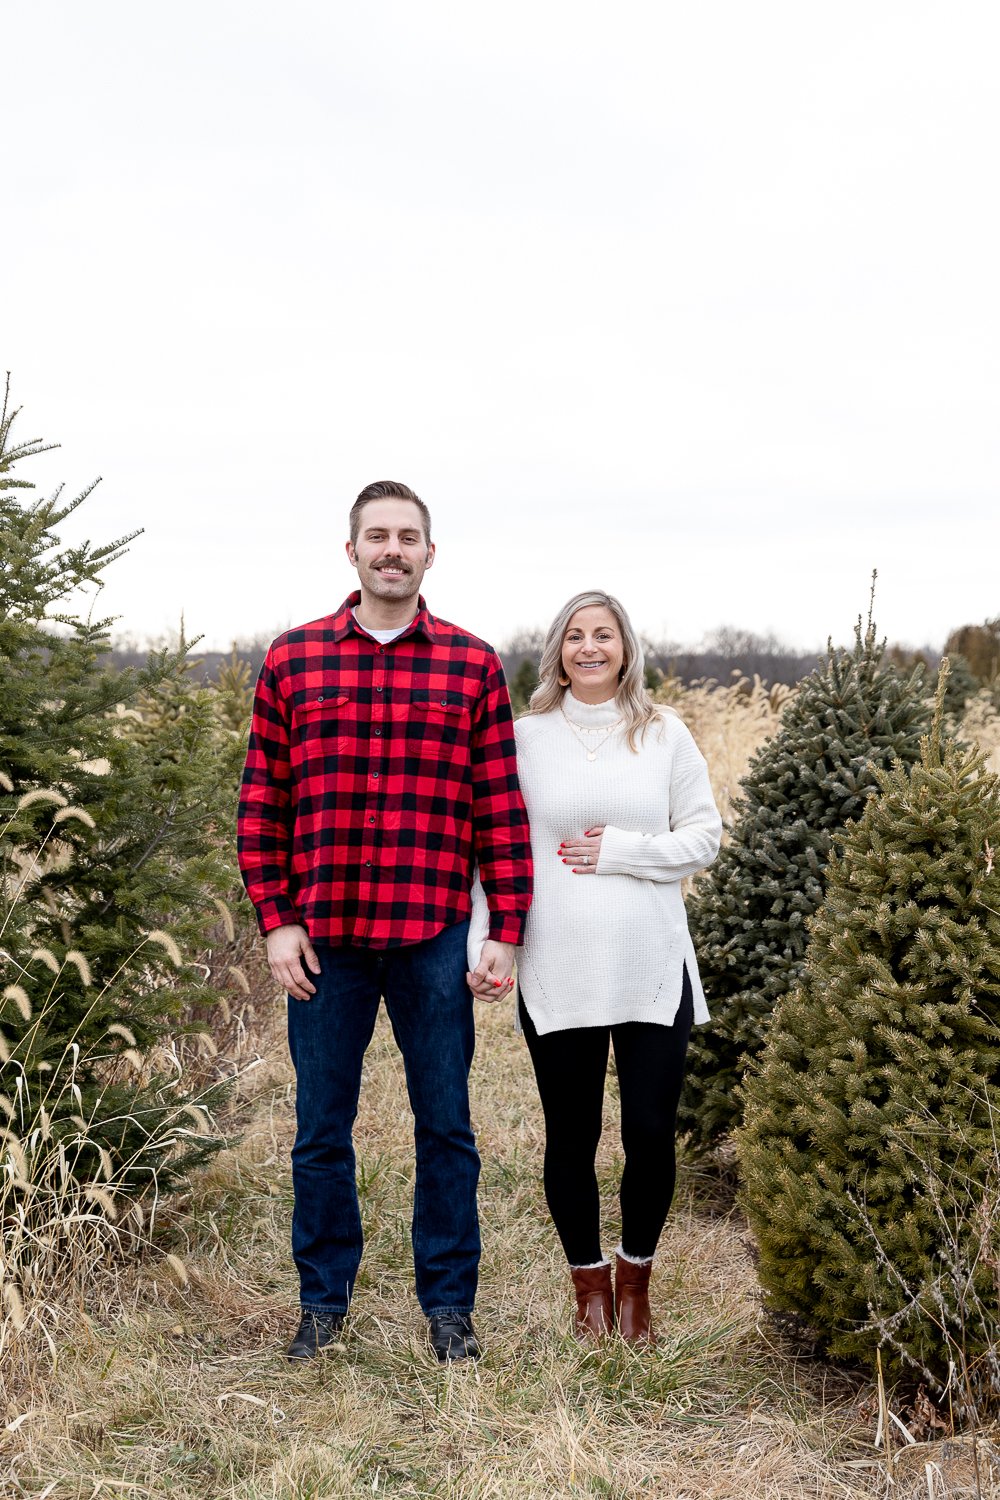 Wisconsin Tree Farm Pregnancy Announcement